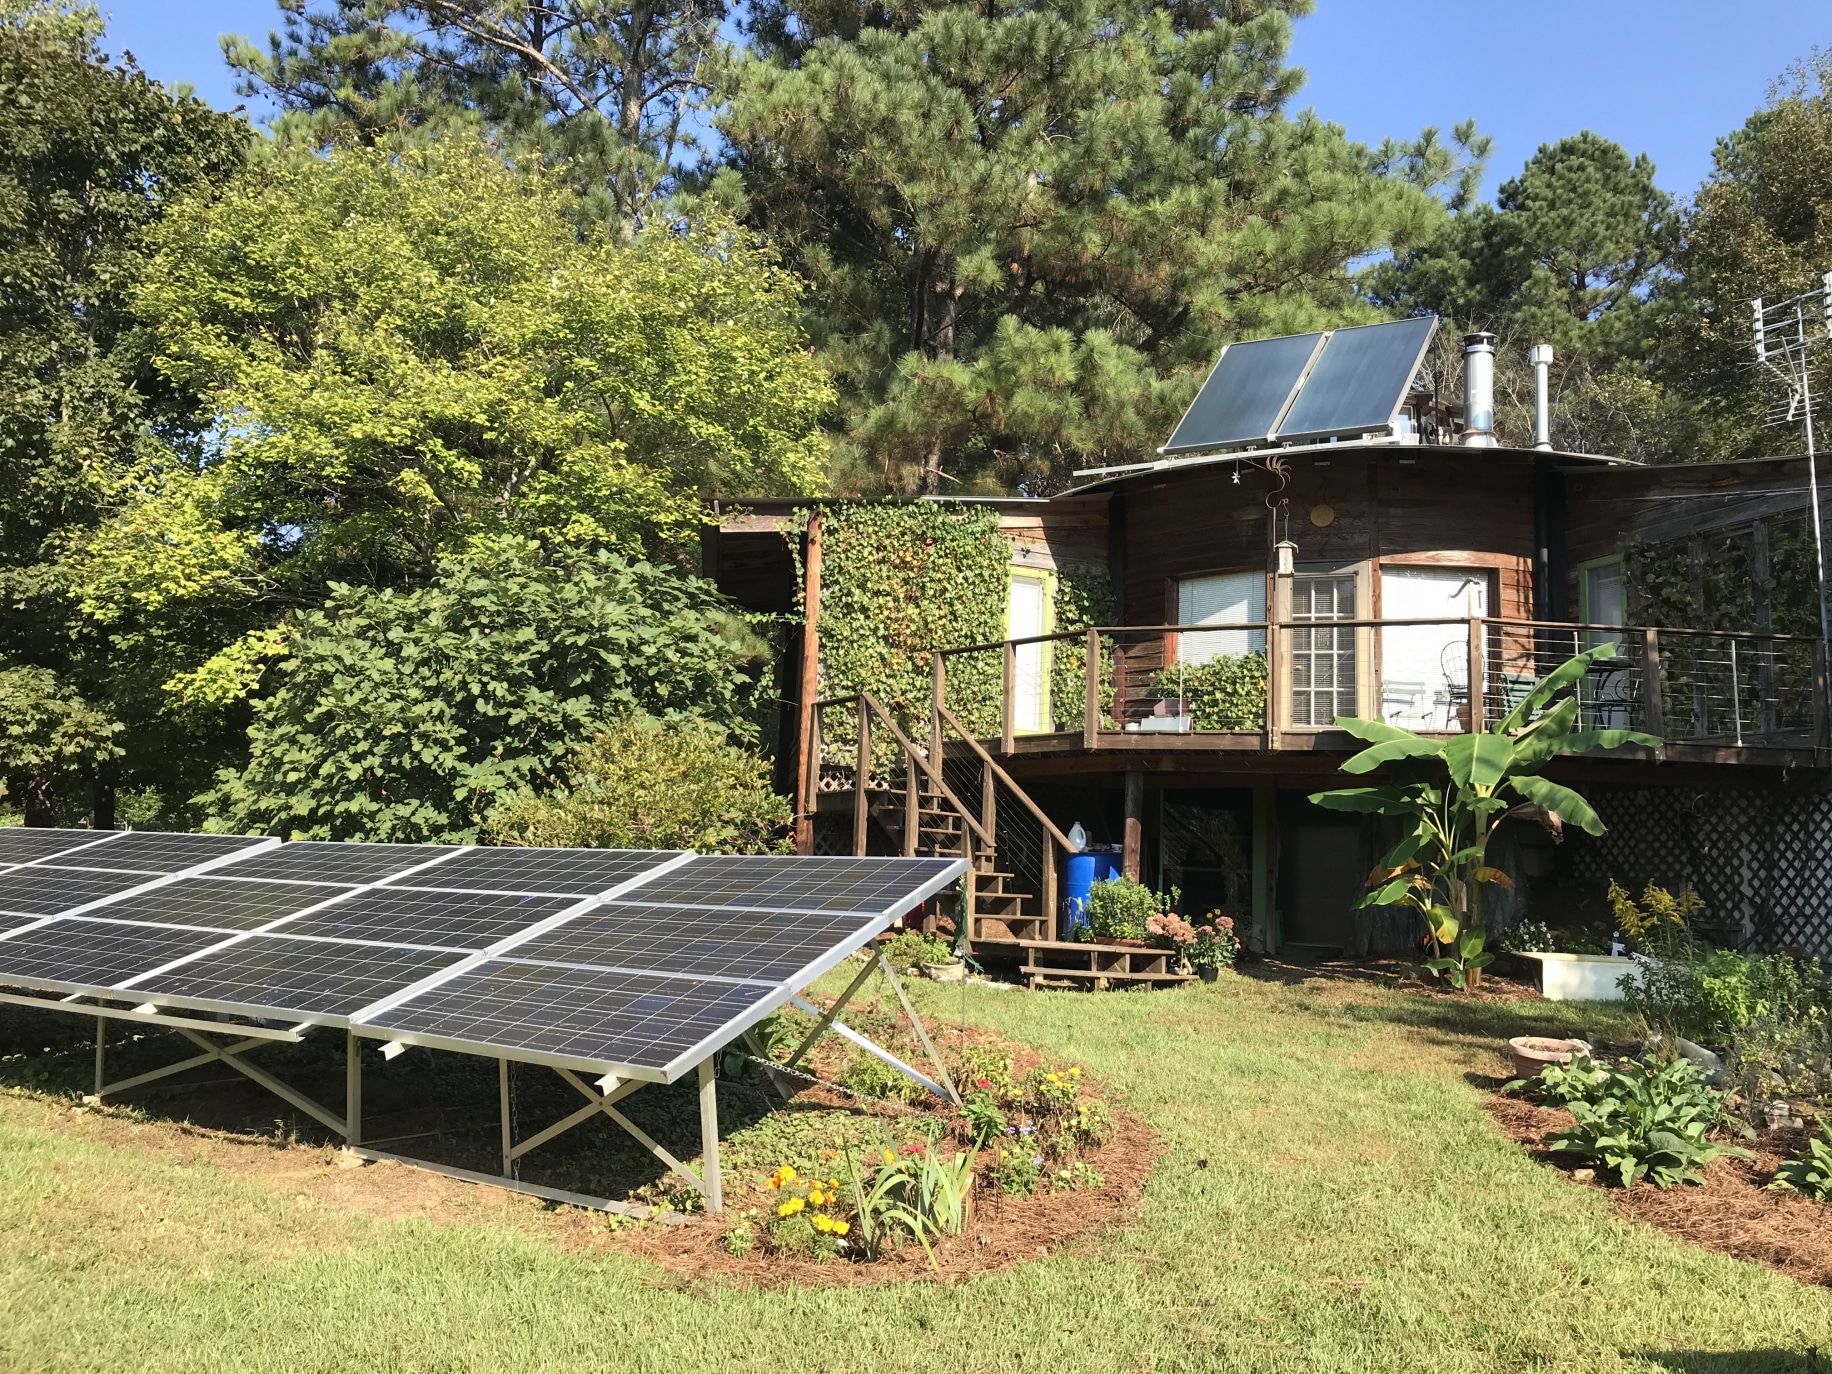 Birmingham, Alabama, solar home tour, energy efficiency, passive solar, Blount County